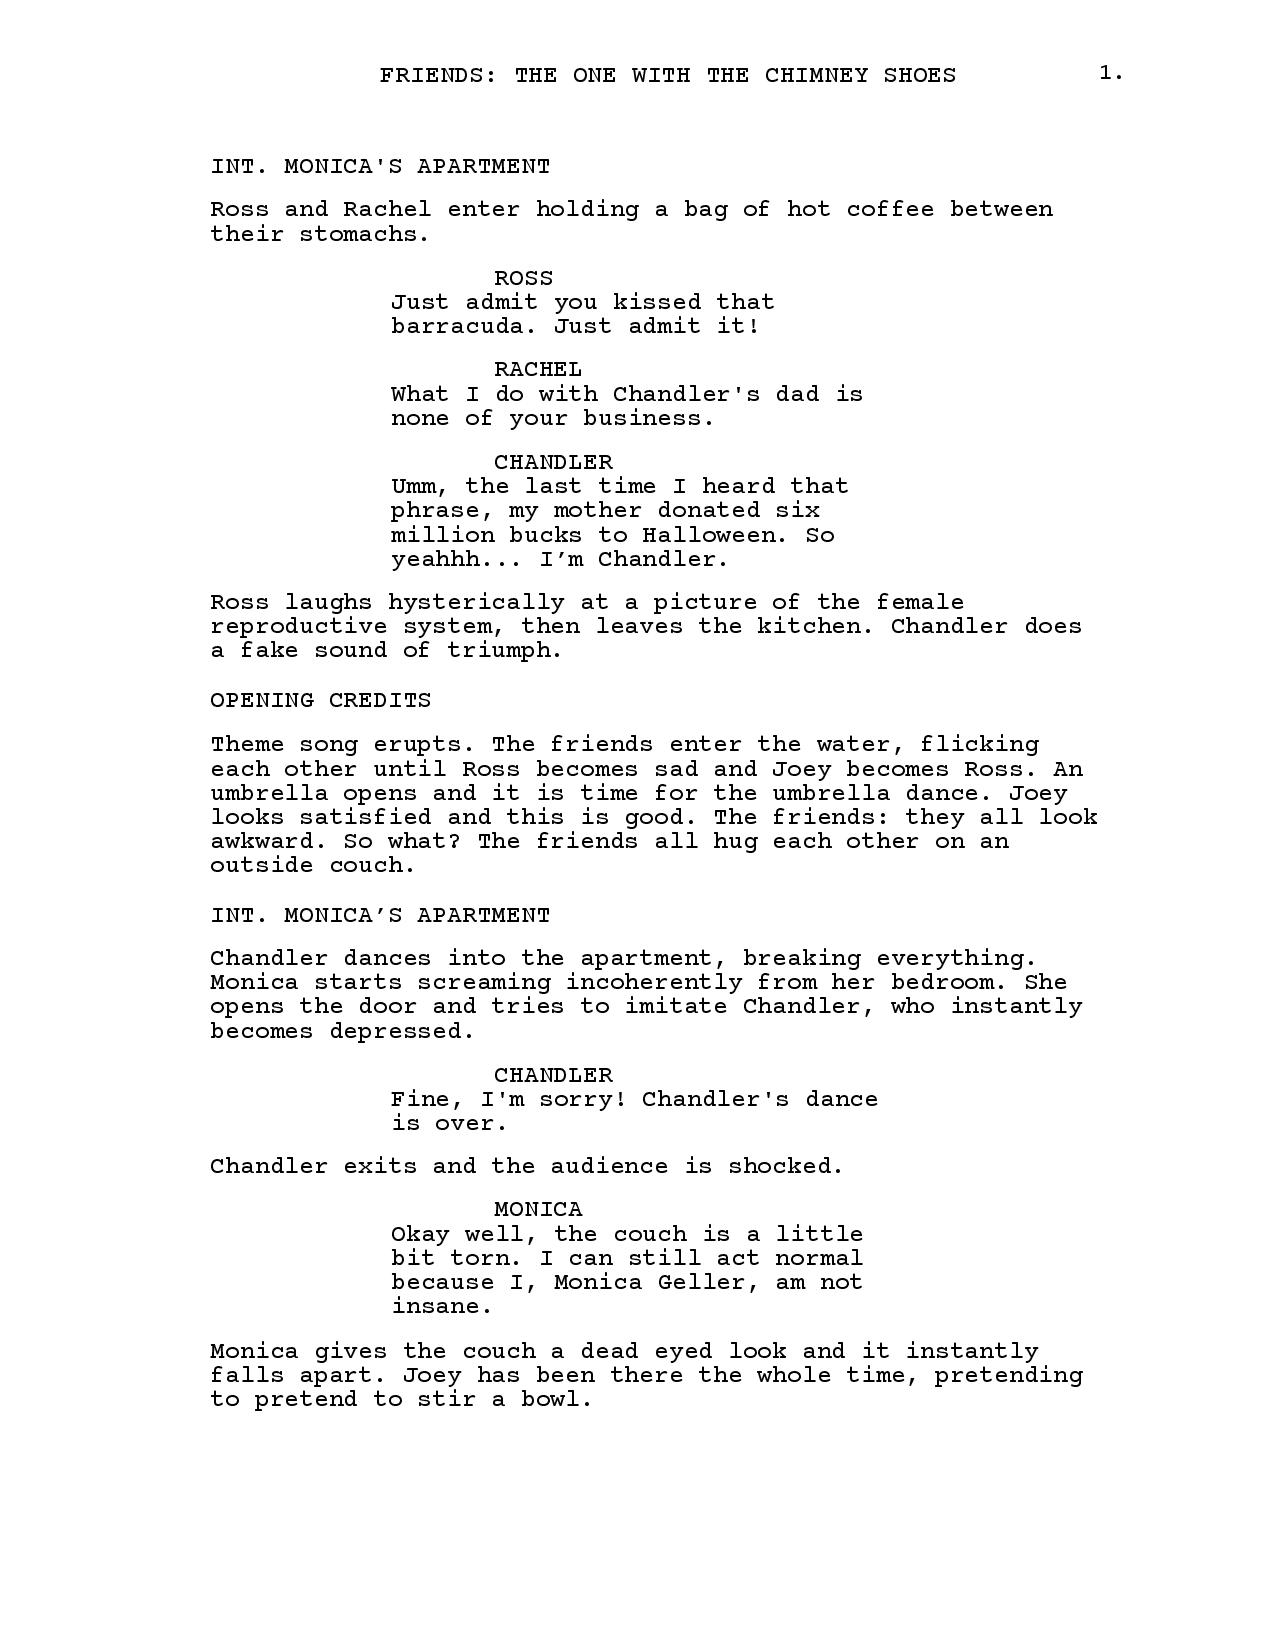 Friends season 1 script pdf download pc games download for free